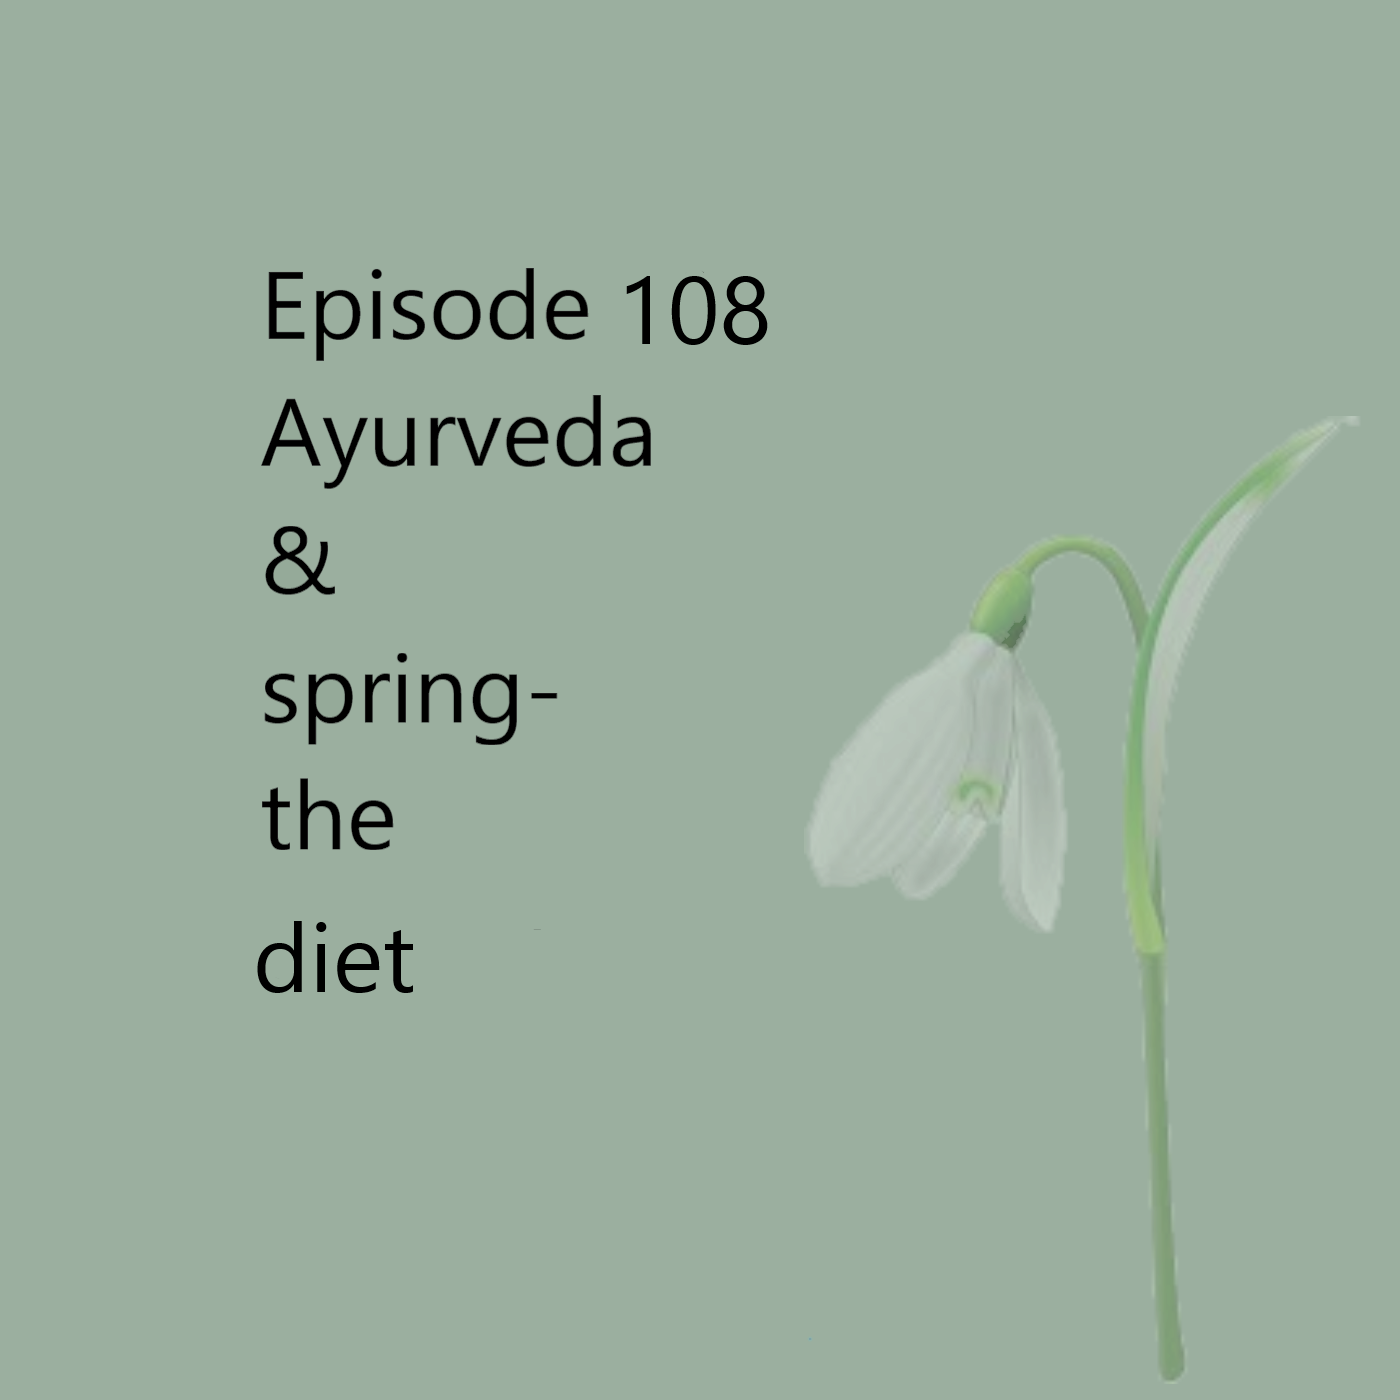 Episode 108 Ayurvedic Life - From Winter to spring #3